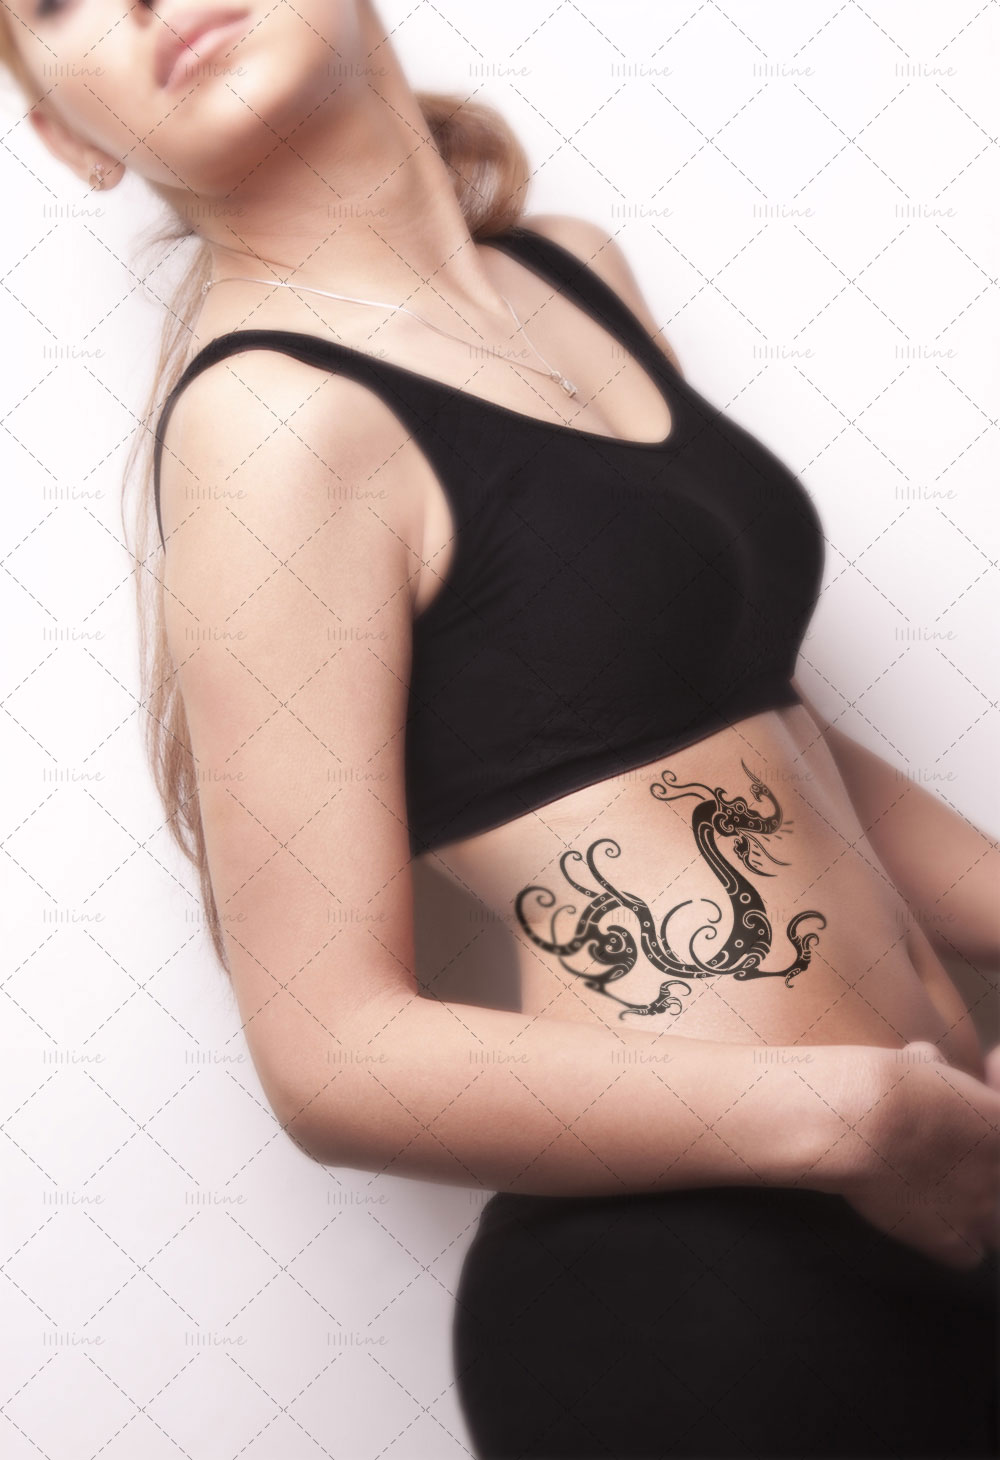 дракон totem tattoo pattern vi eps pdf